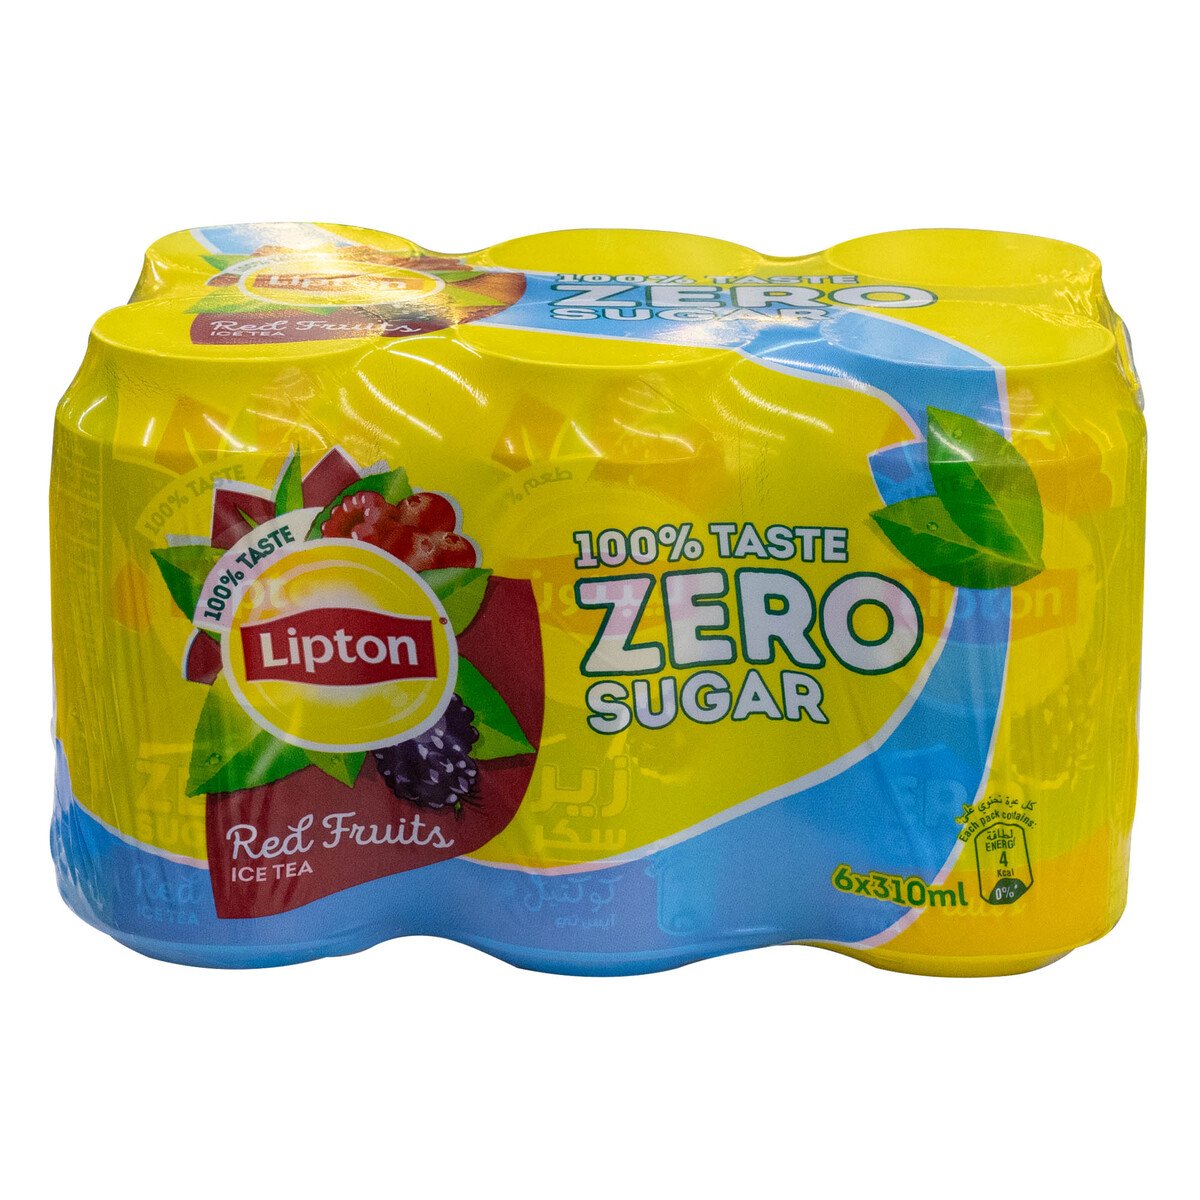 Lipton Zero Sugar Red Fruits Ice Tea 6 x 310 ml